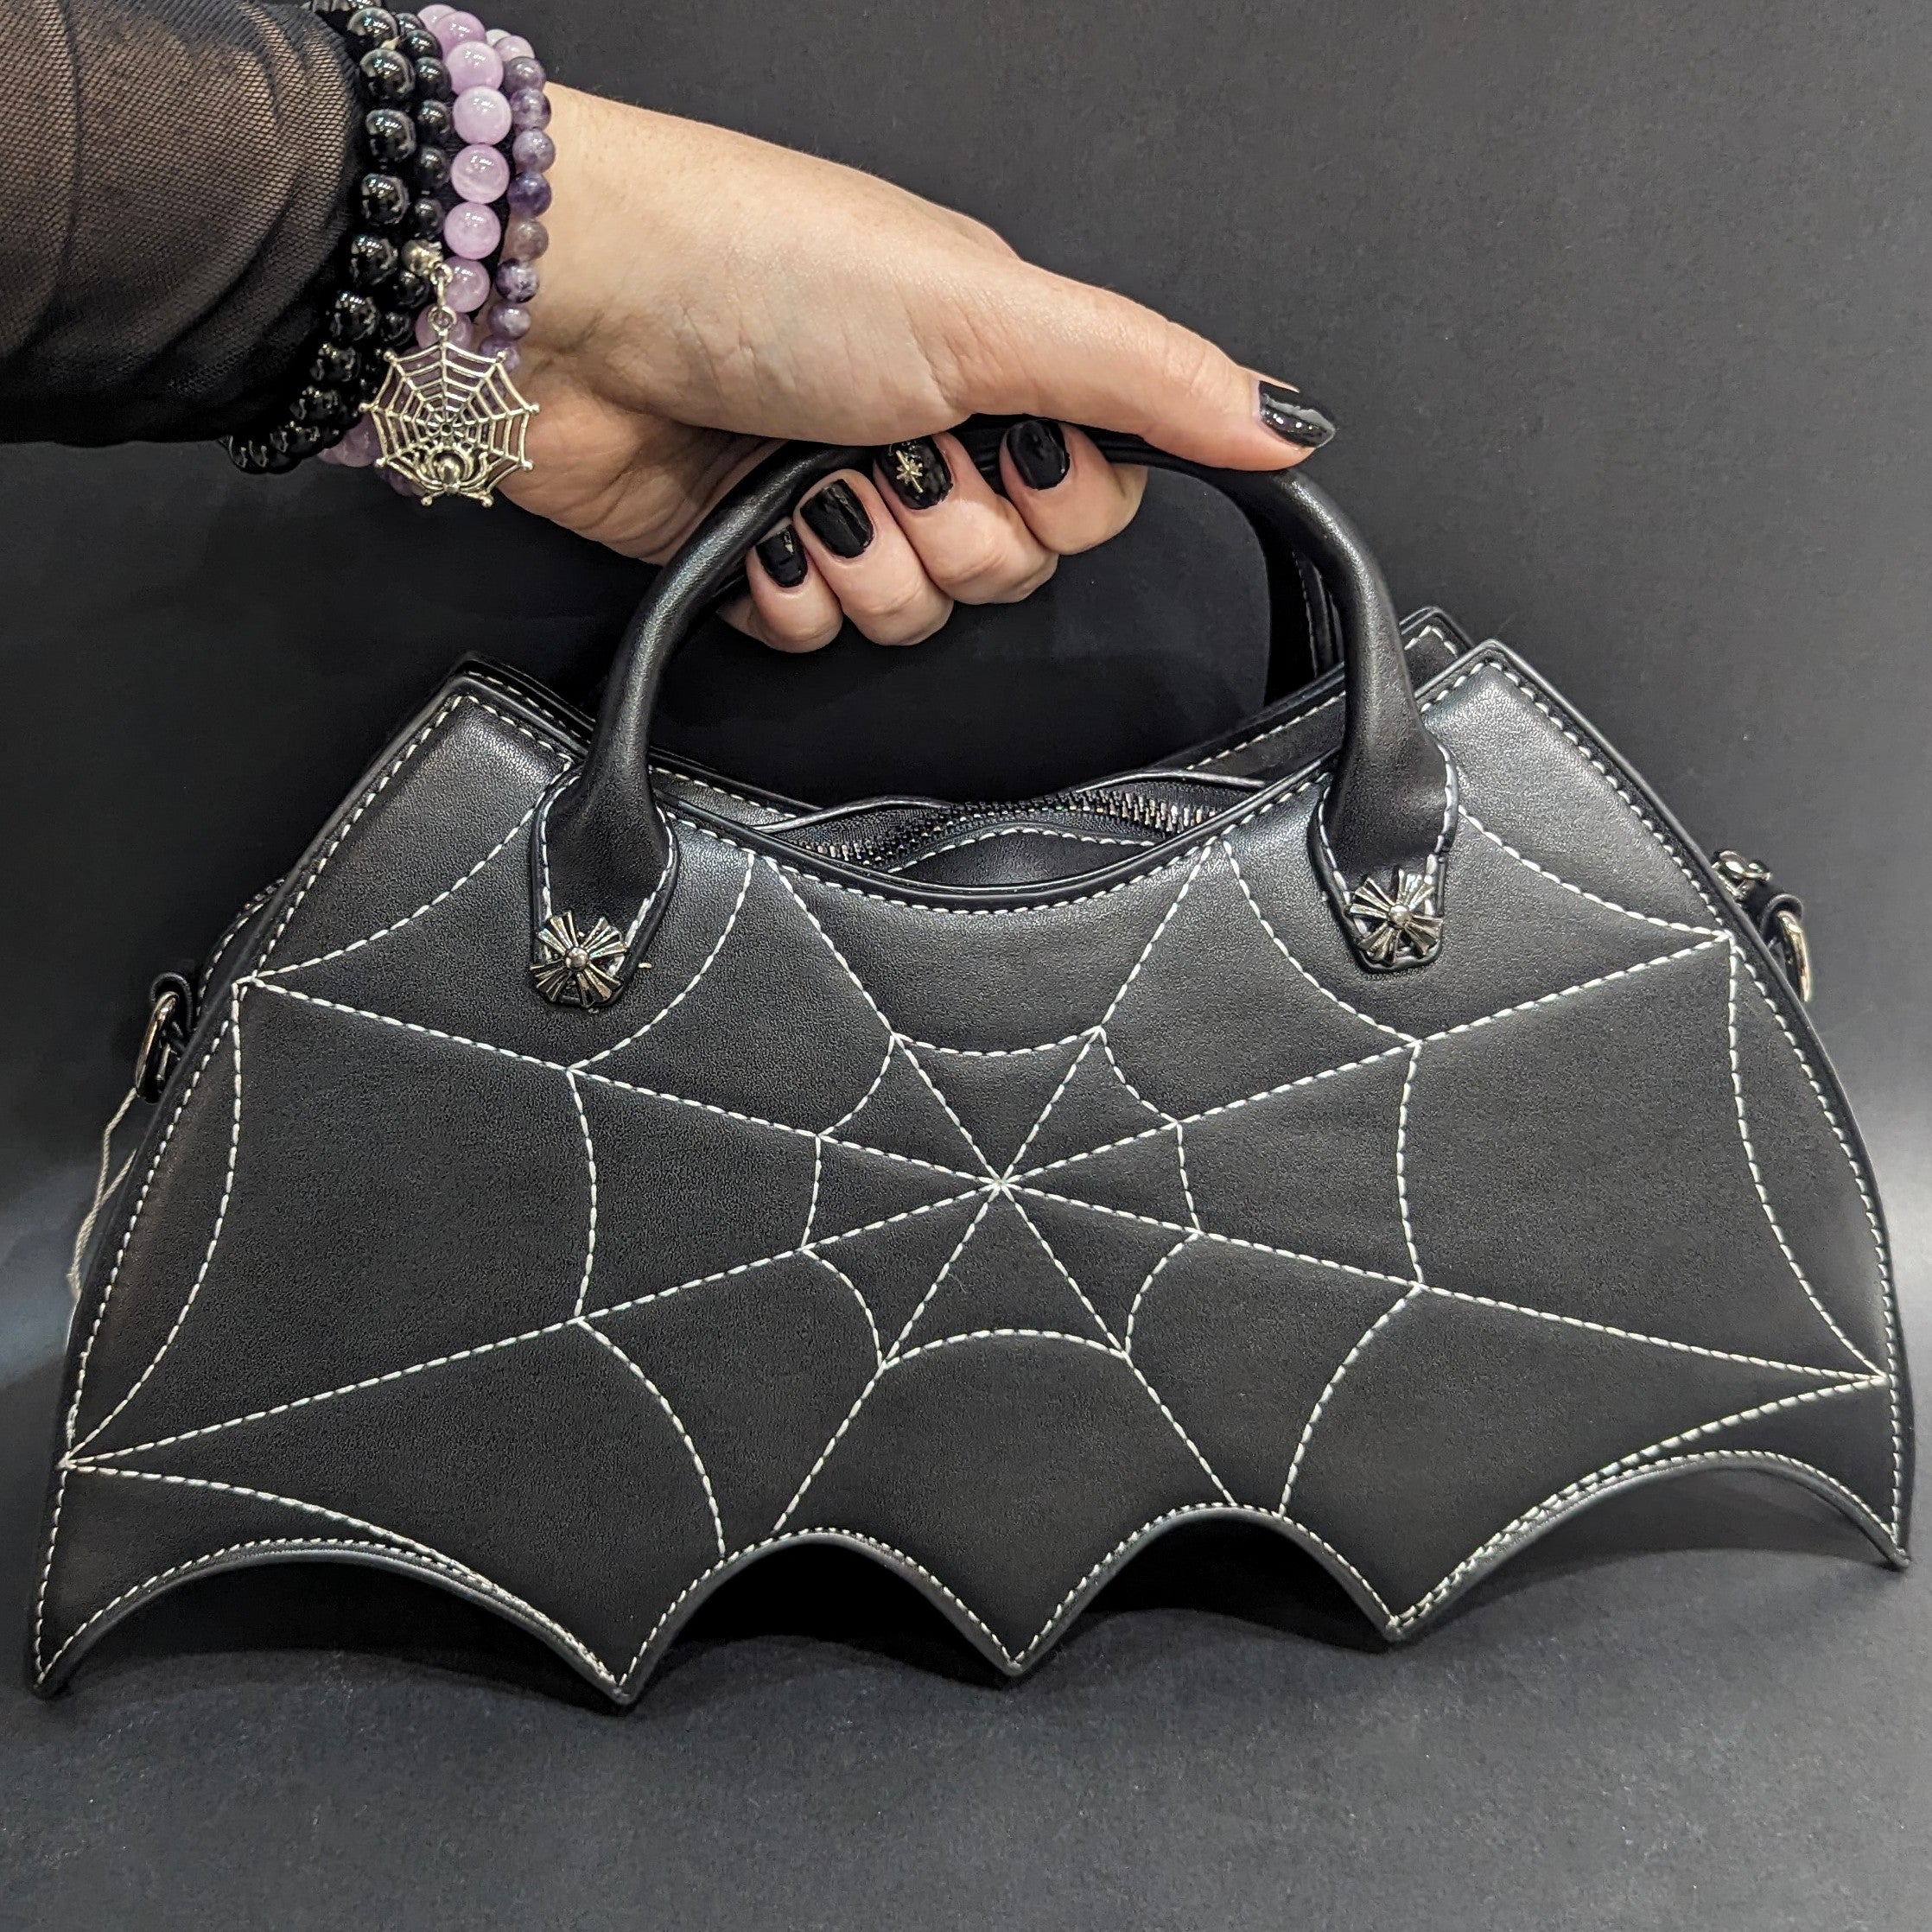 Bat Wing Handbag/Crossbody Bag